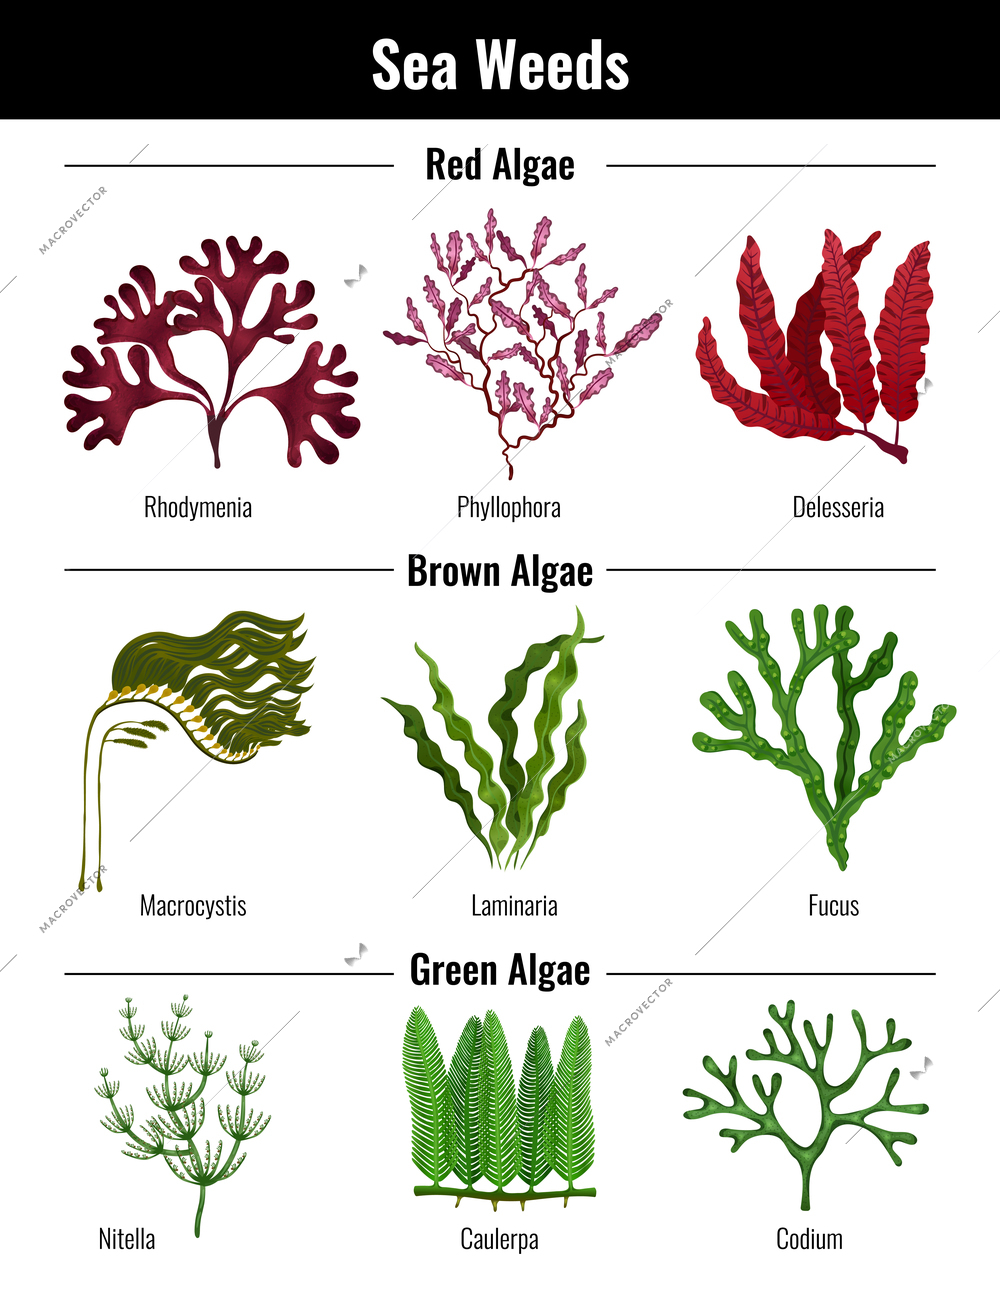 Red brown green algae seaweeds collection botanical educative info poster with laminaria codium rhodymenia flat vector illustration